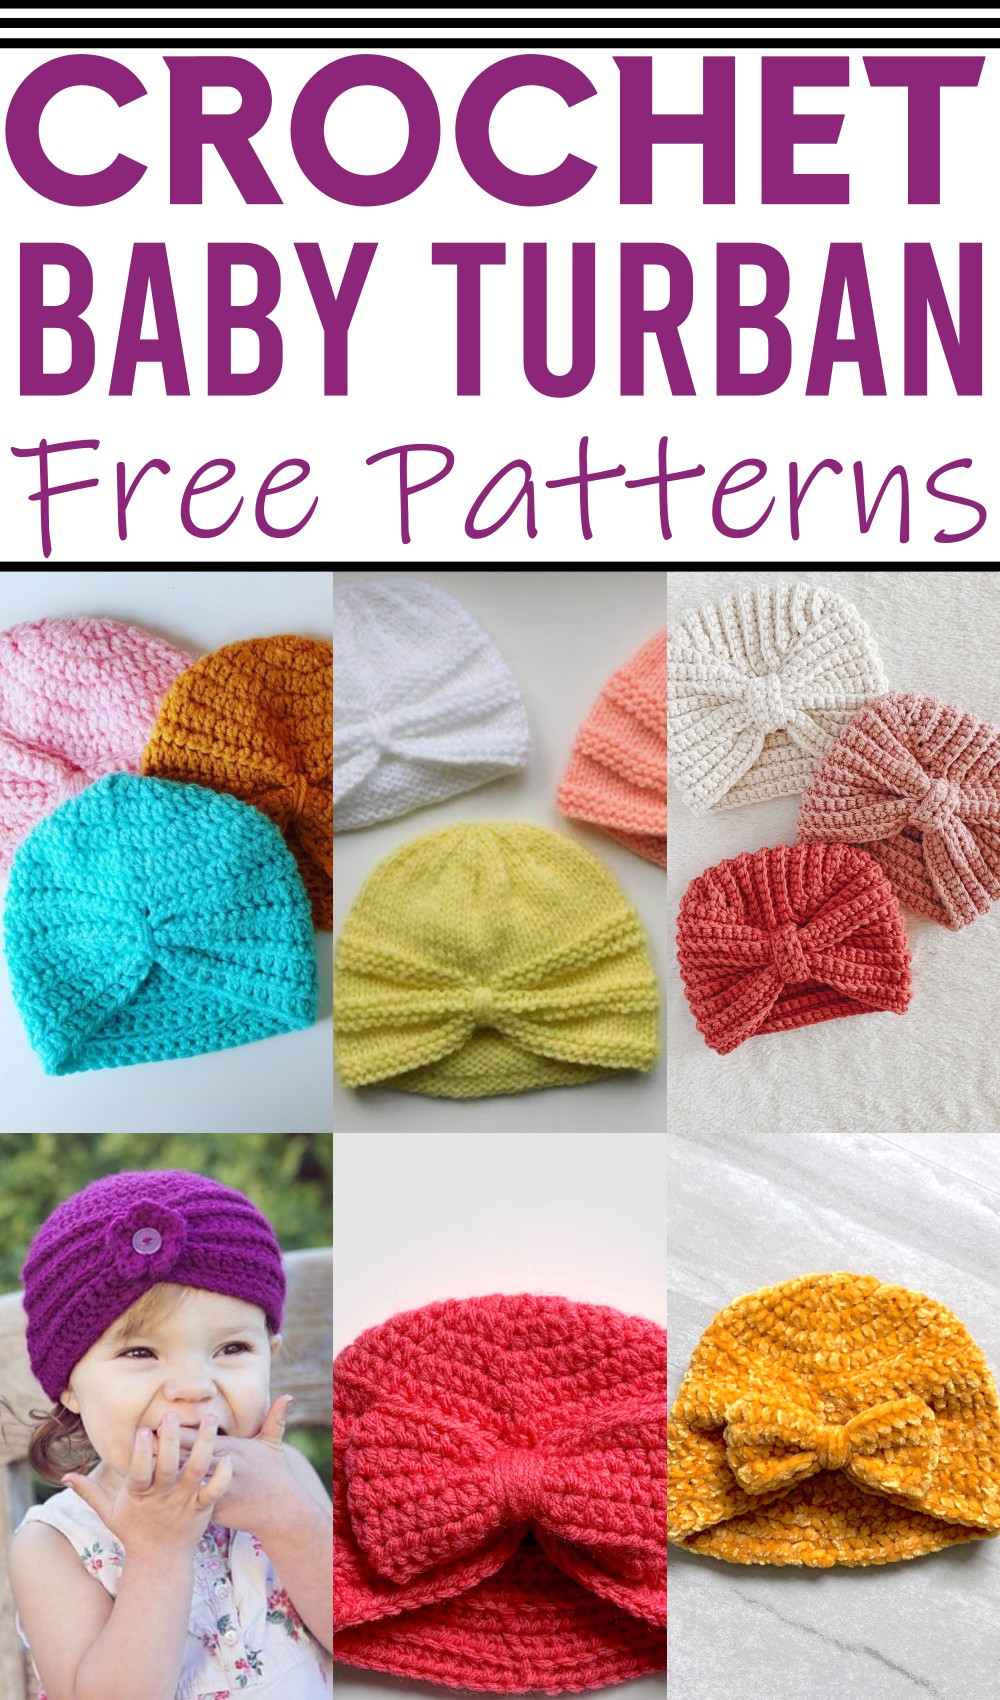 Crochet Baby Turban Patterns